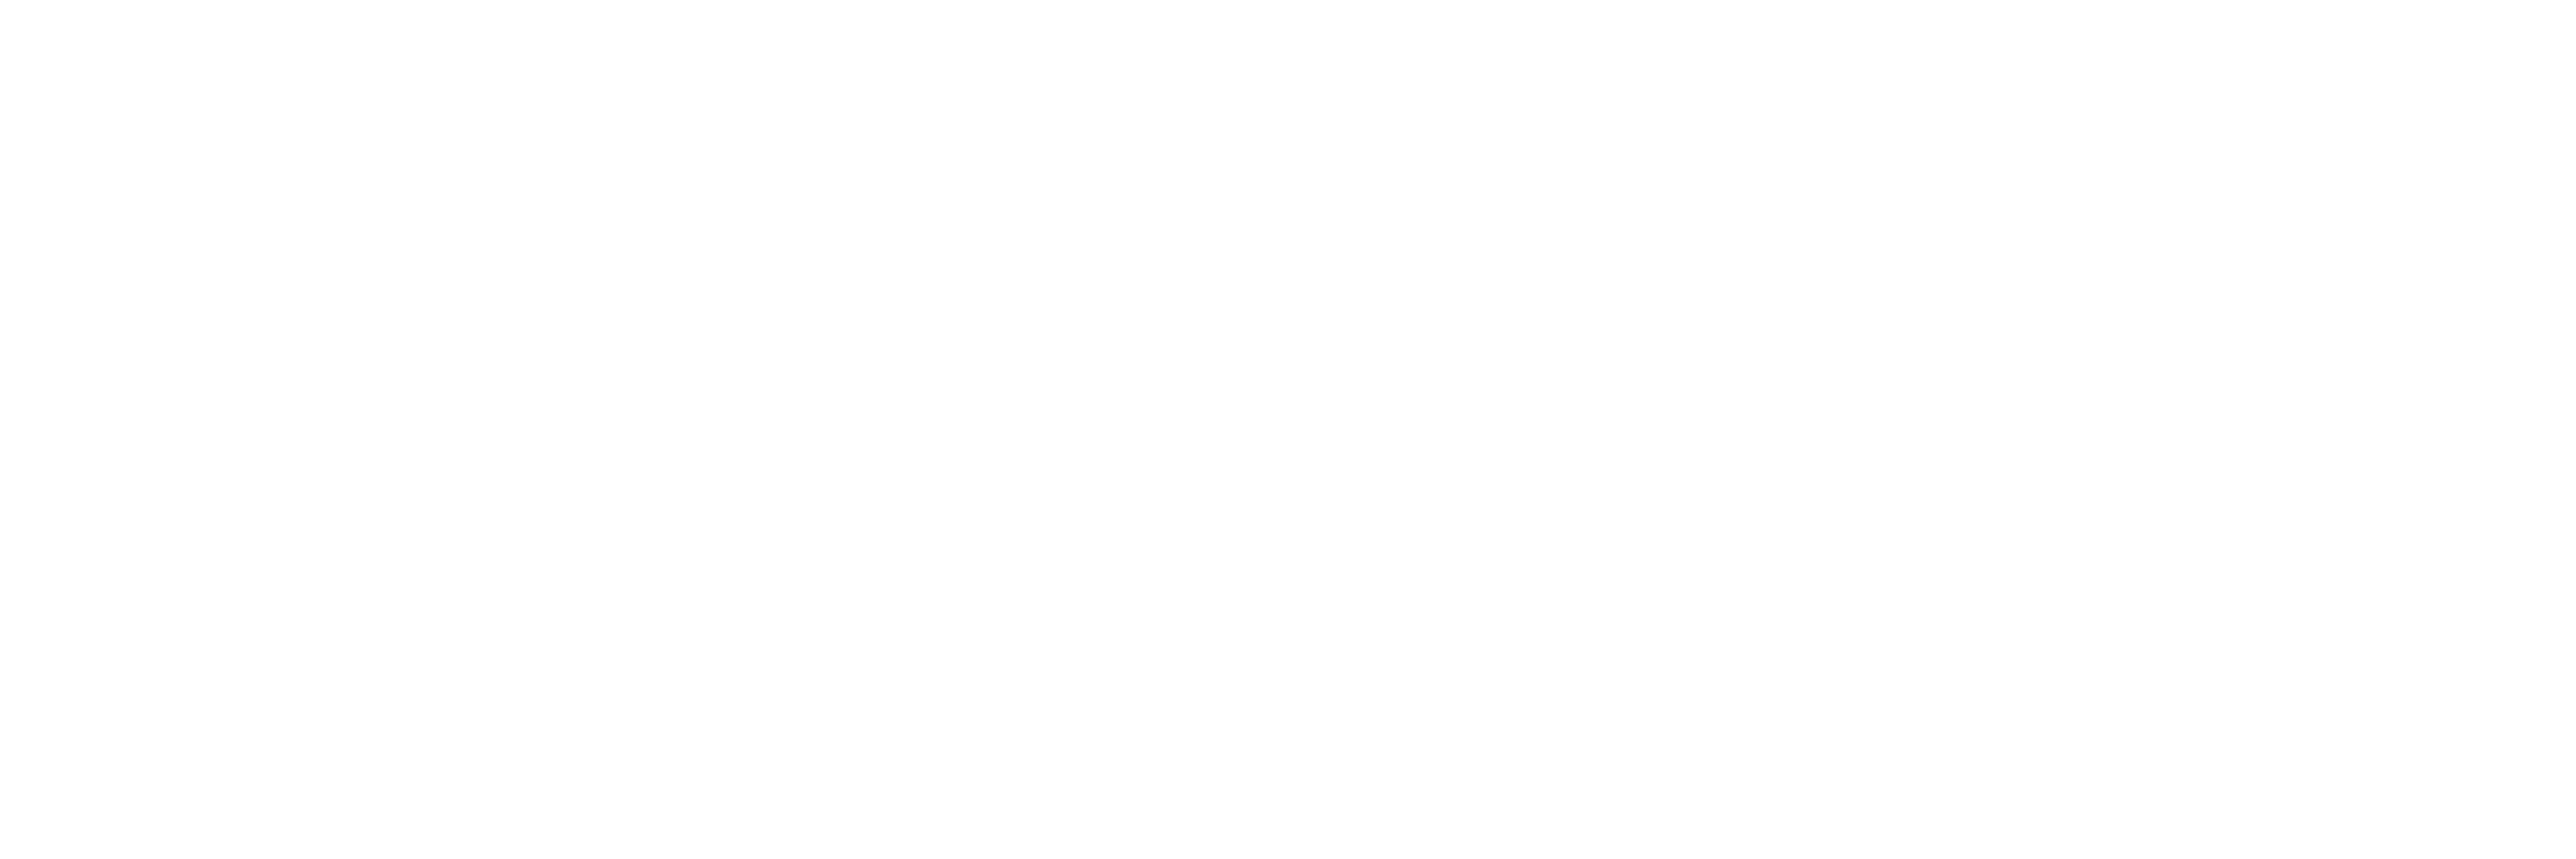 tp-mg-energies-logo white version